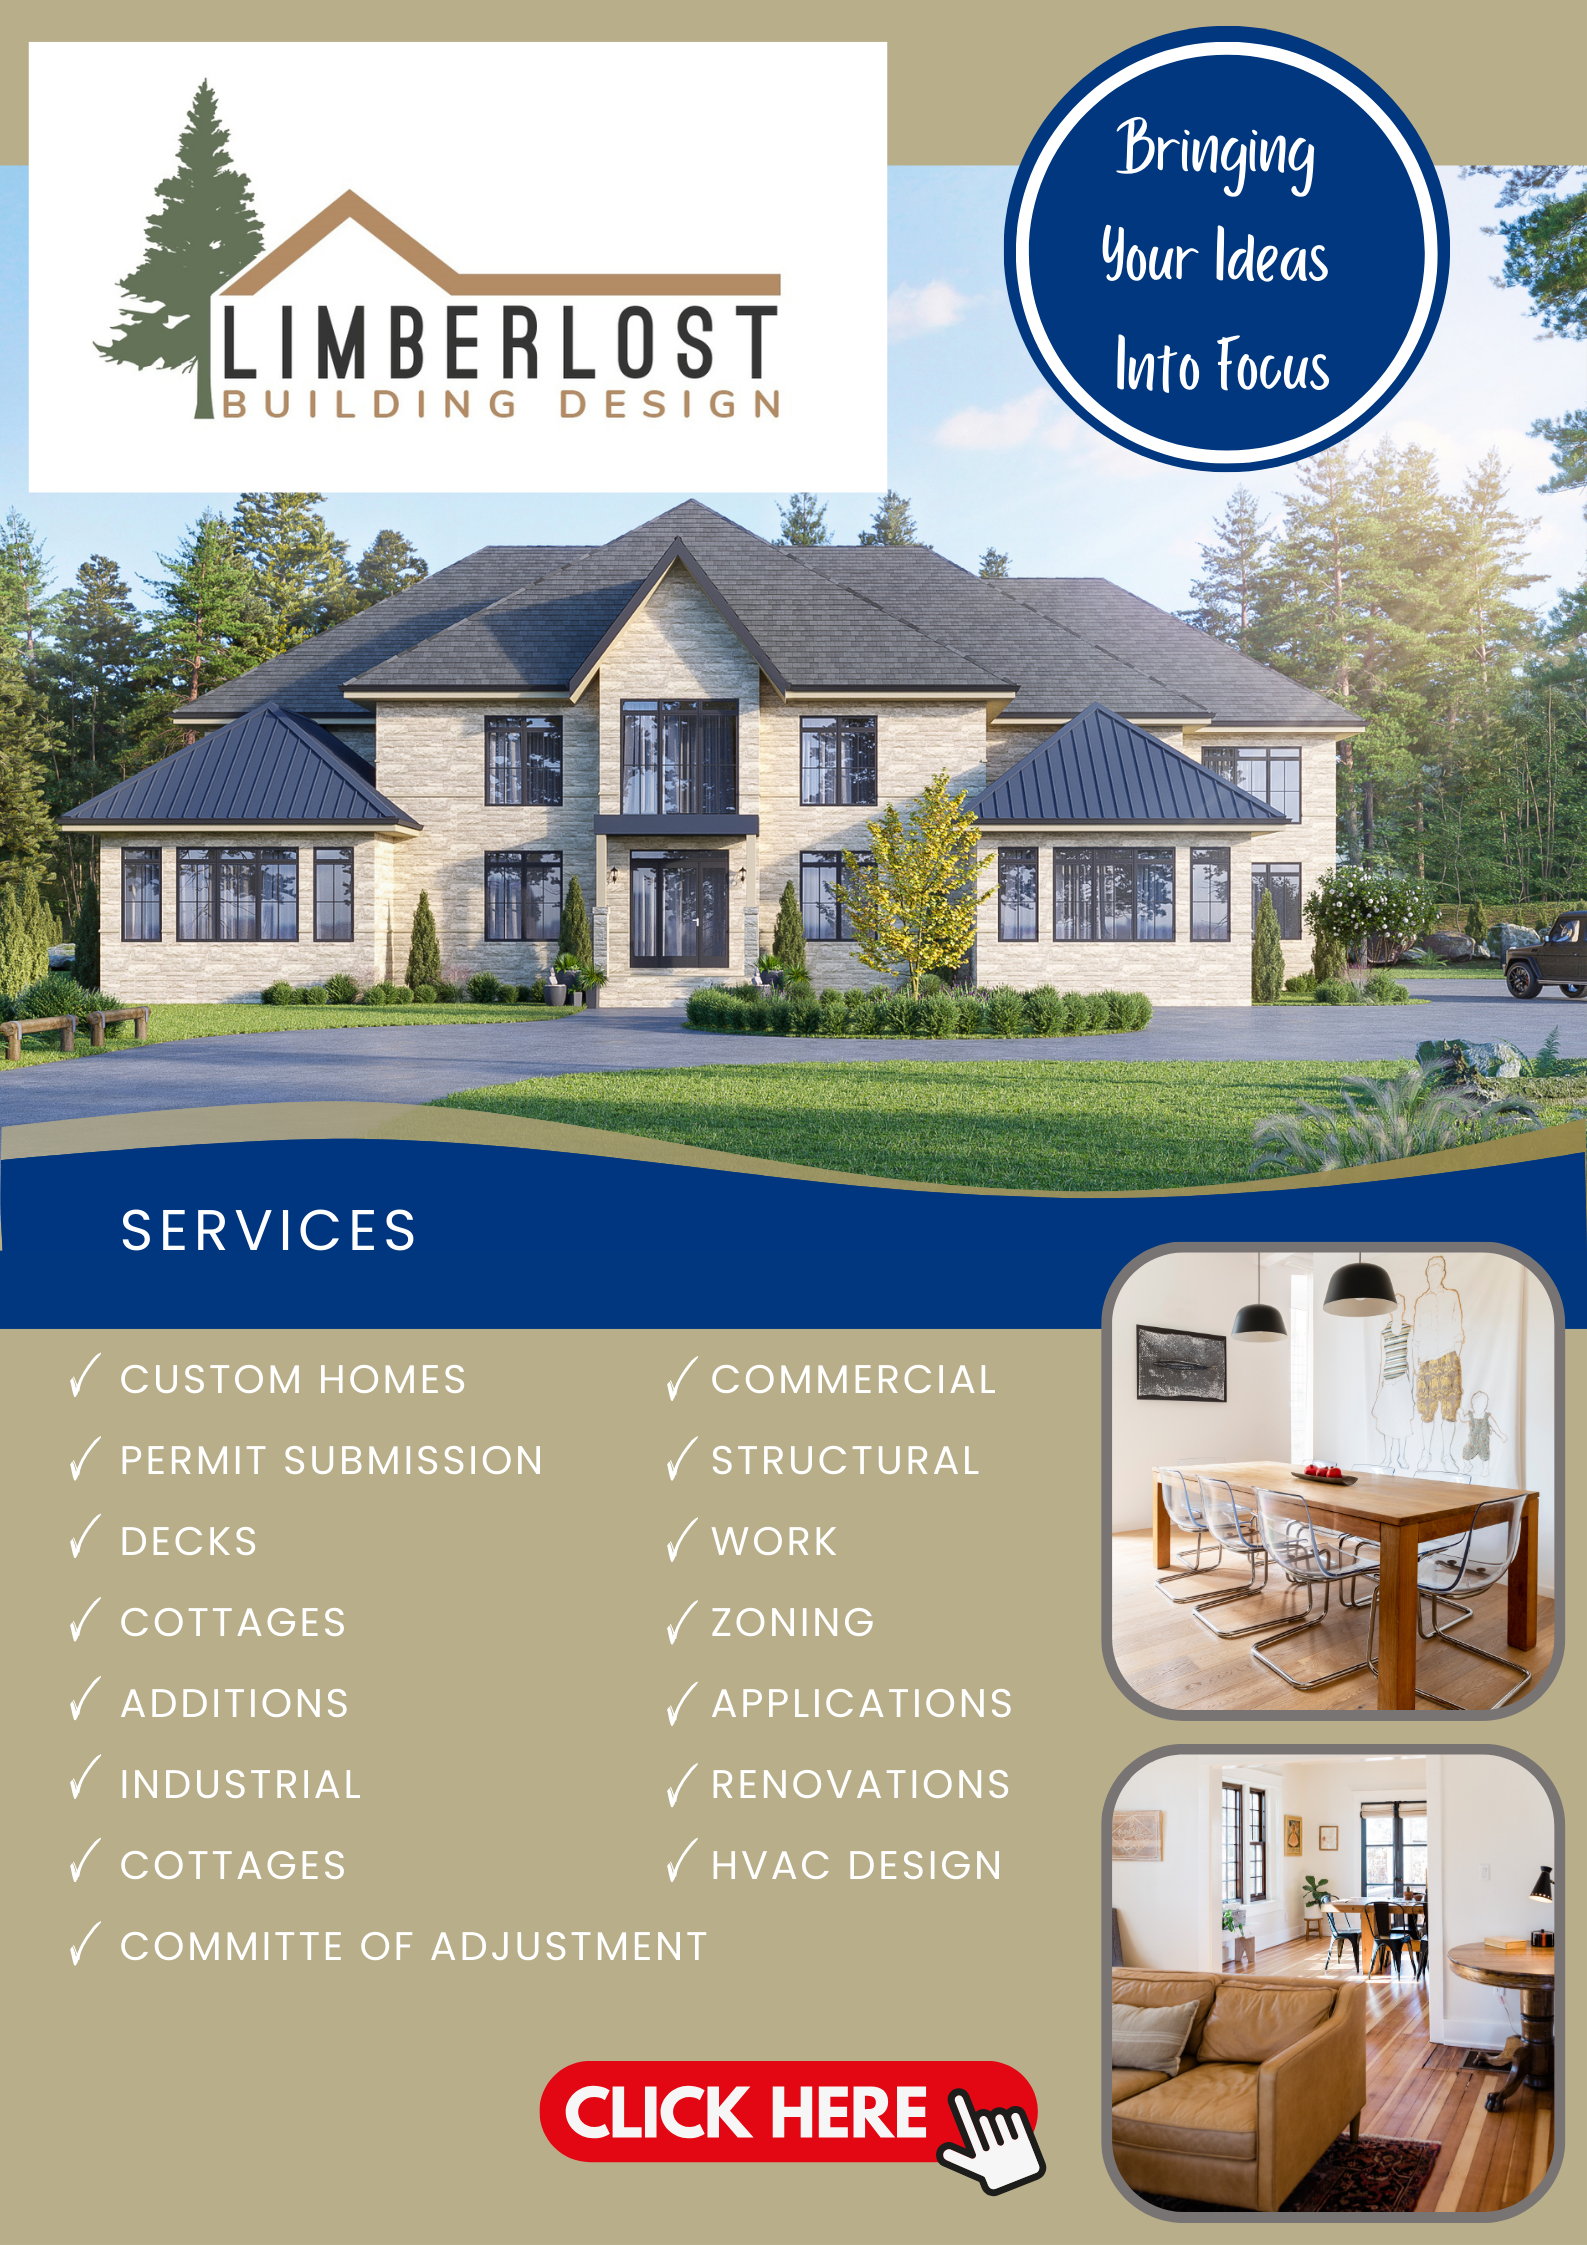 Limberlost Building Design